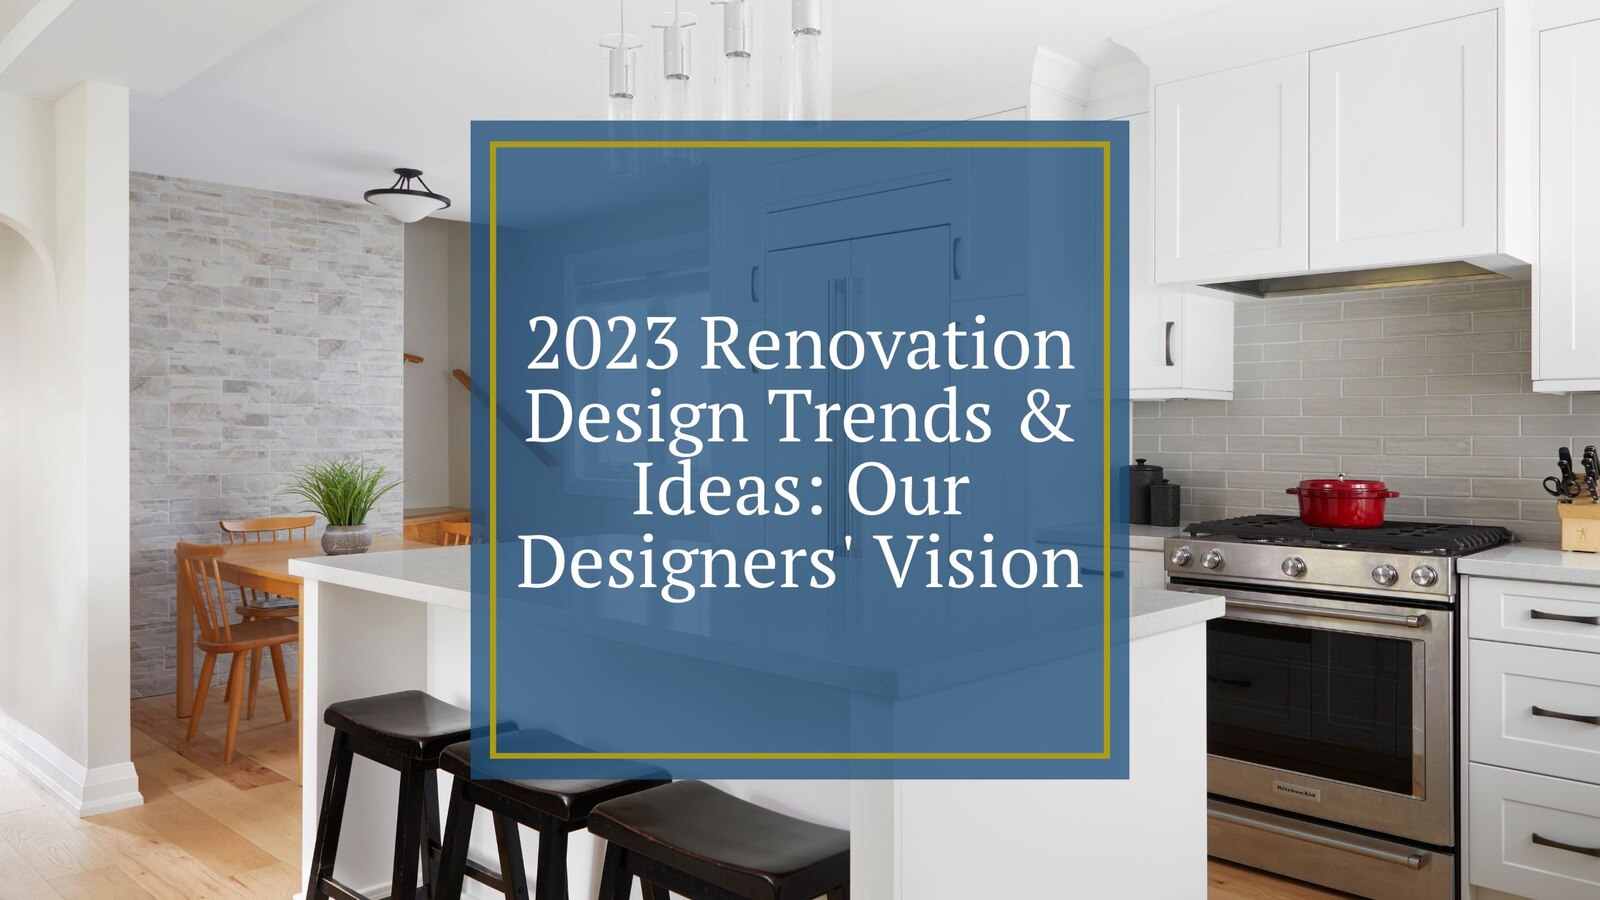 2023 Renovation Design Trends & Ideas: Our Designers' Vision